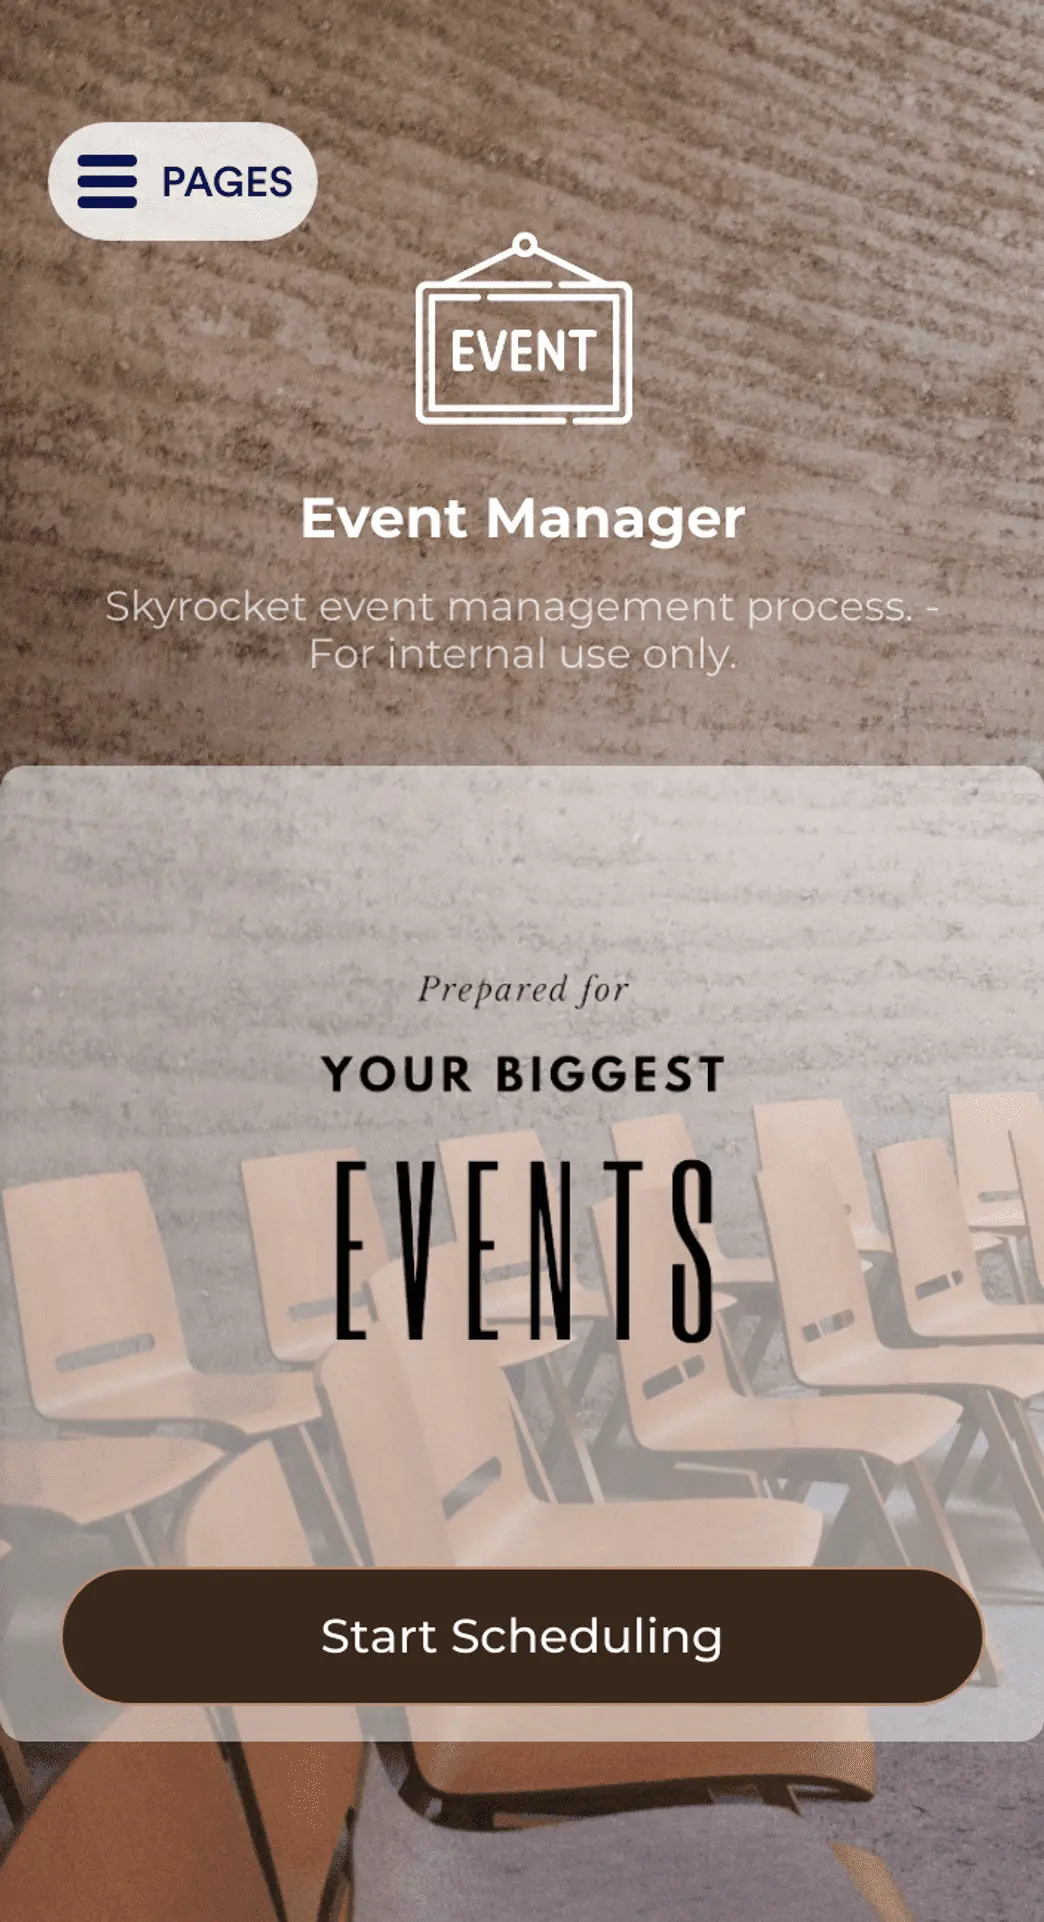 Event Management App